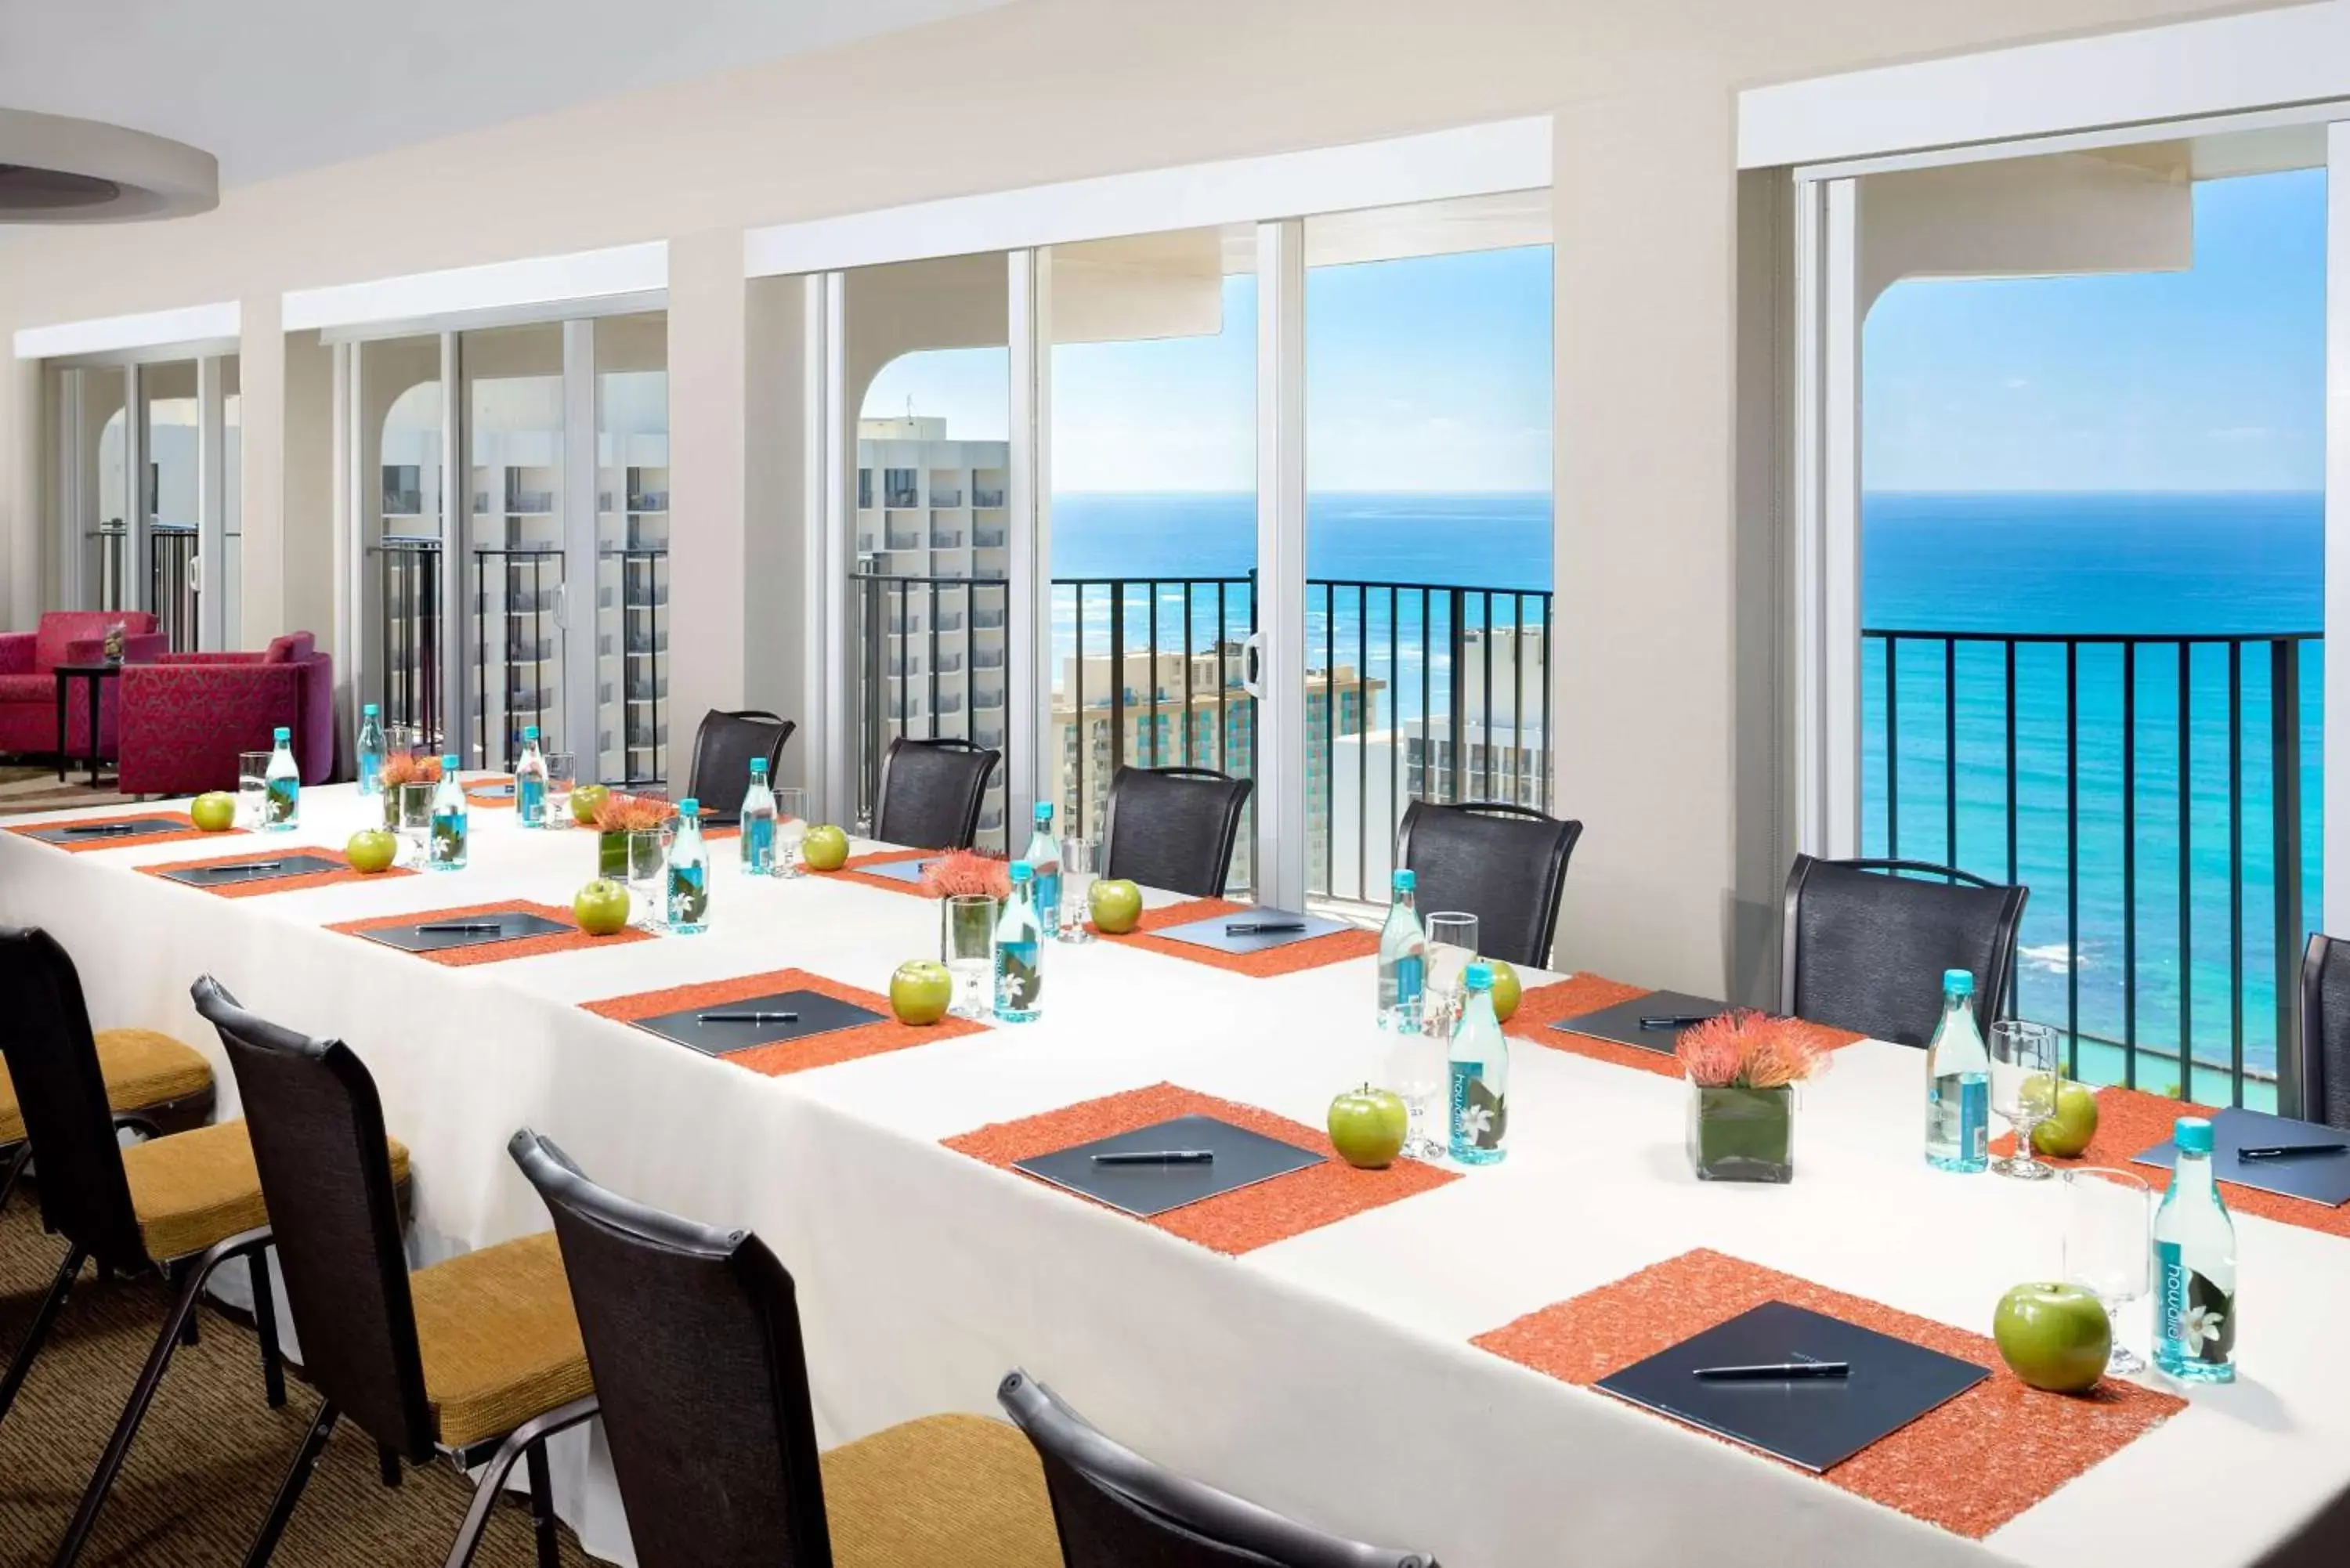 Meeting/conference room in Hilton Waikiki Beach